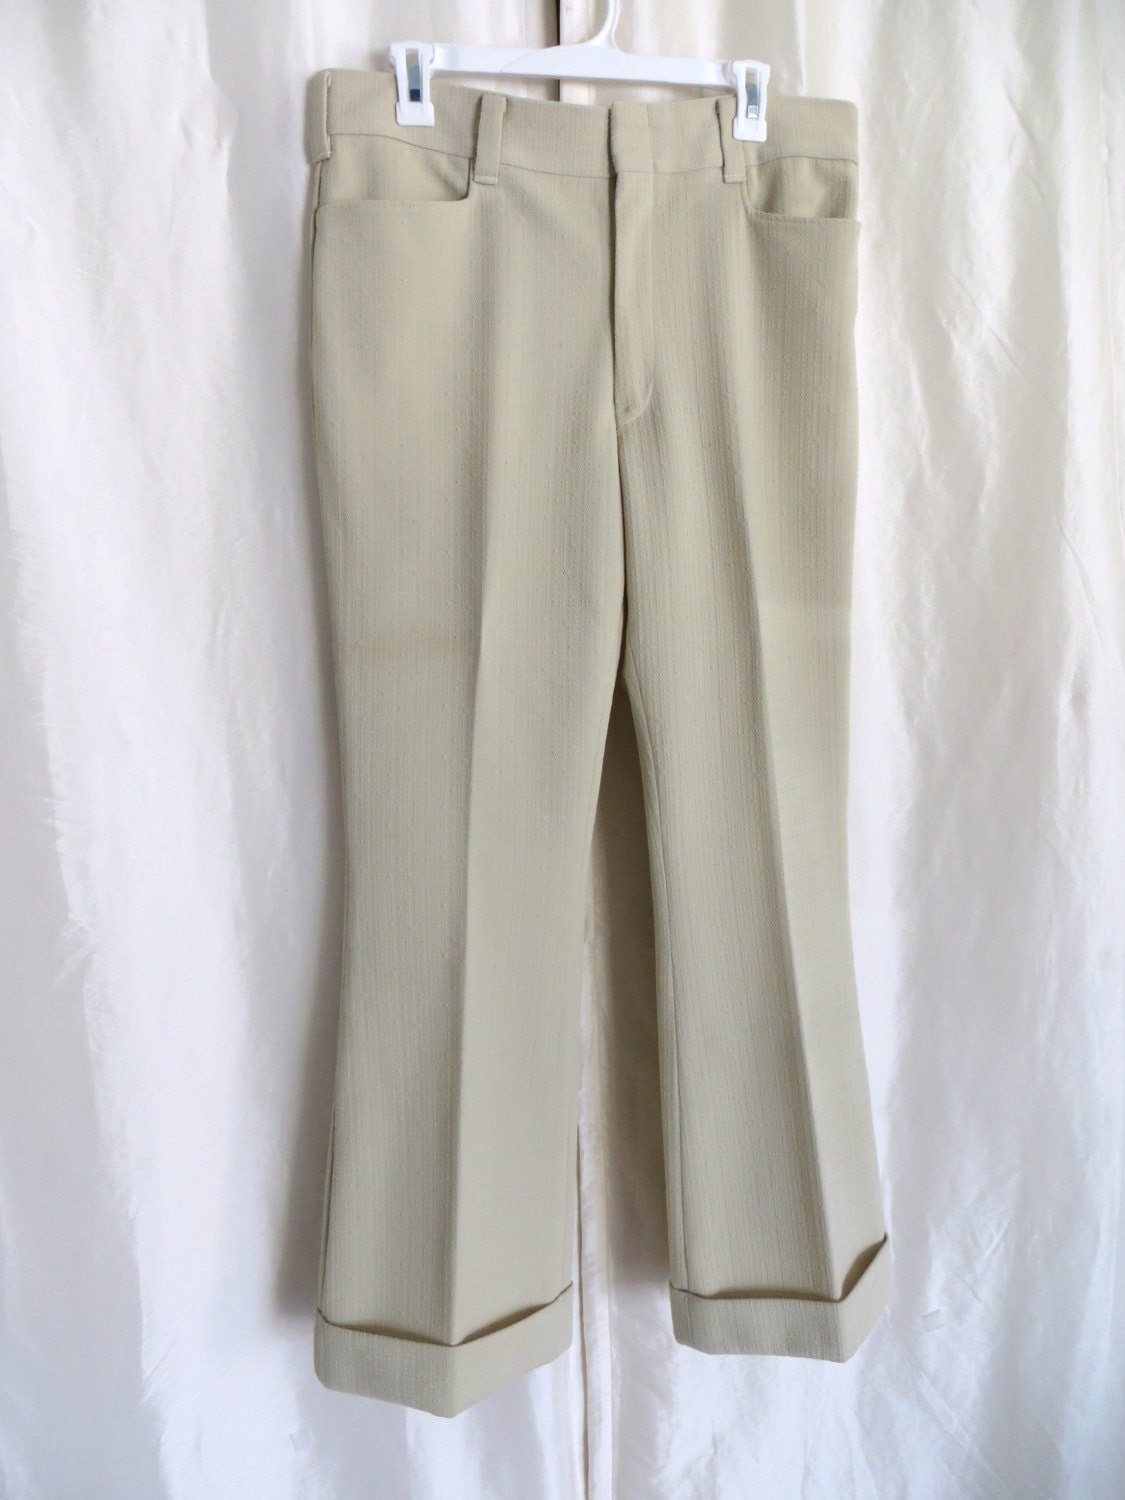 Vintage 70s mens polyester pants retro by GabriellasTreasures